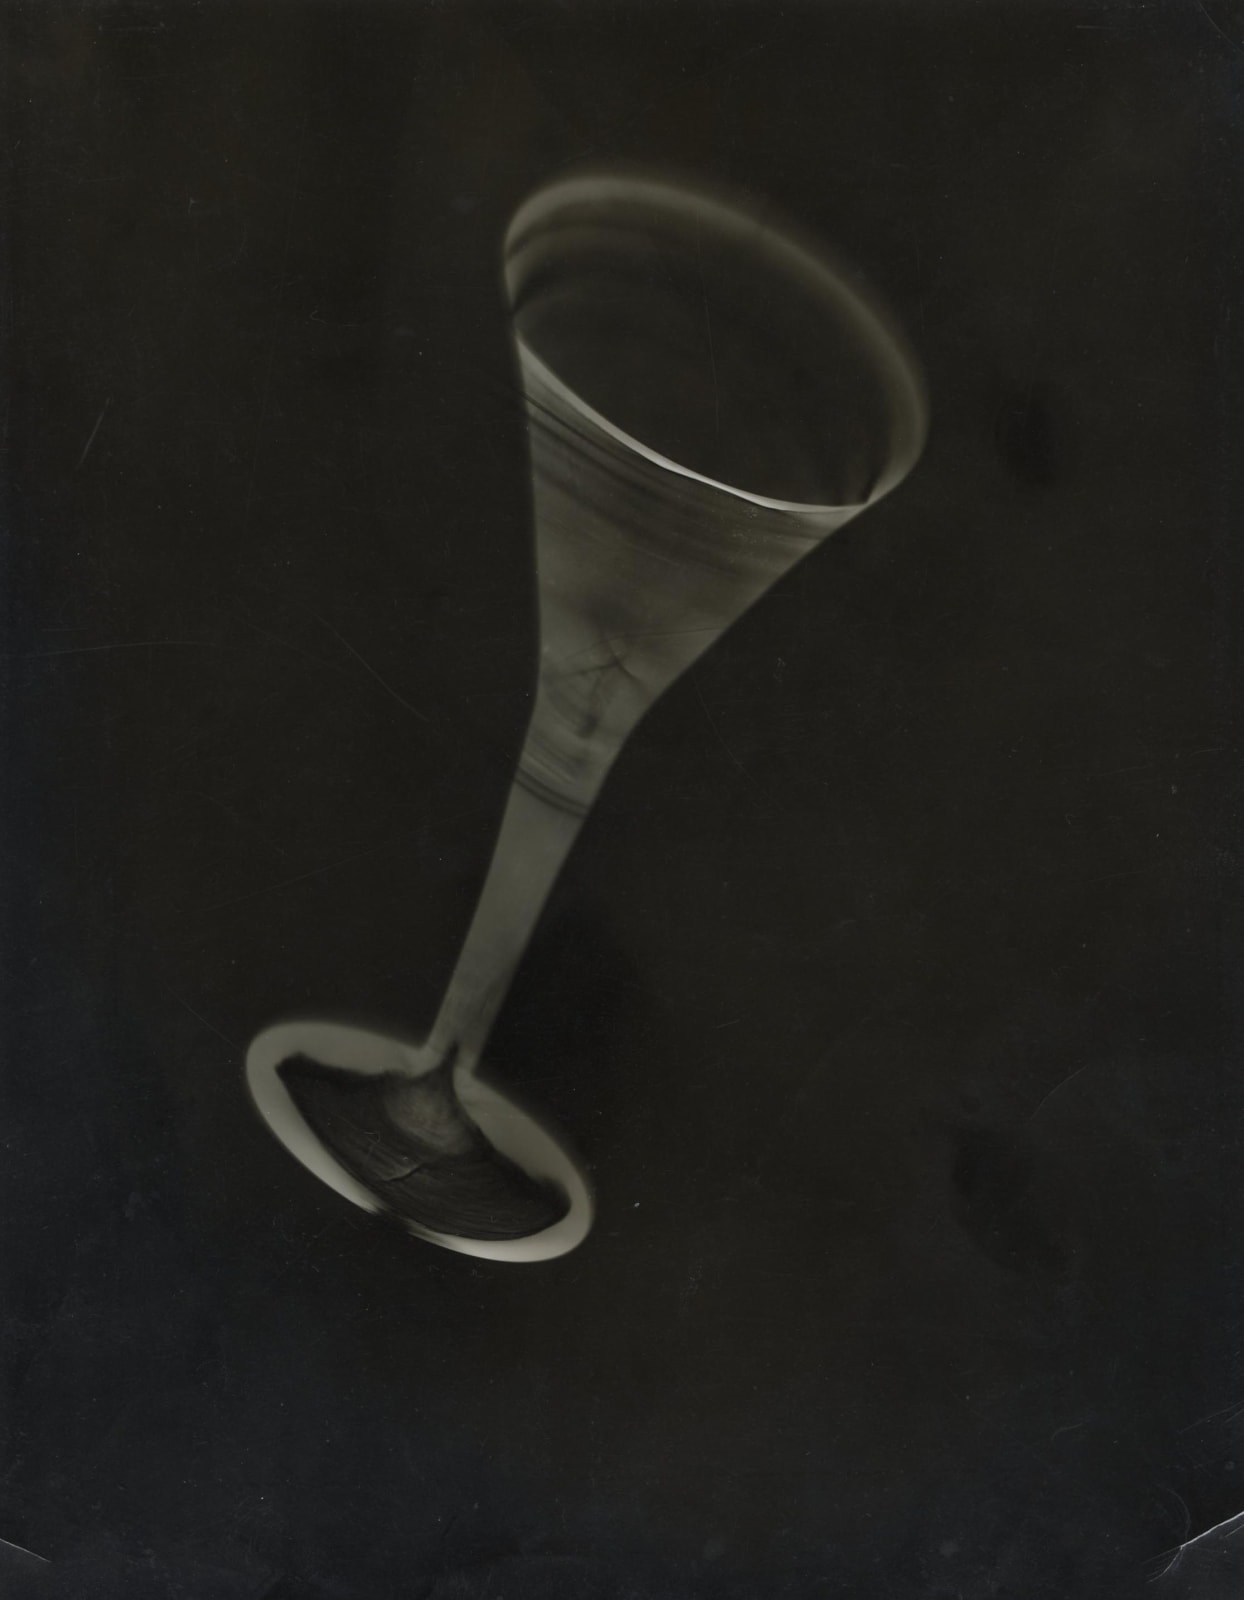 László Moholy-Nagy, Untitled (photogram with wine glass), 1939-41